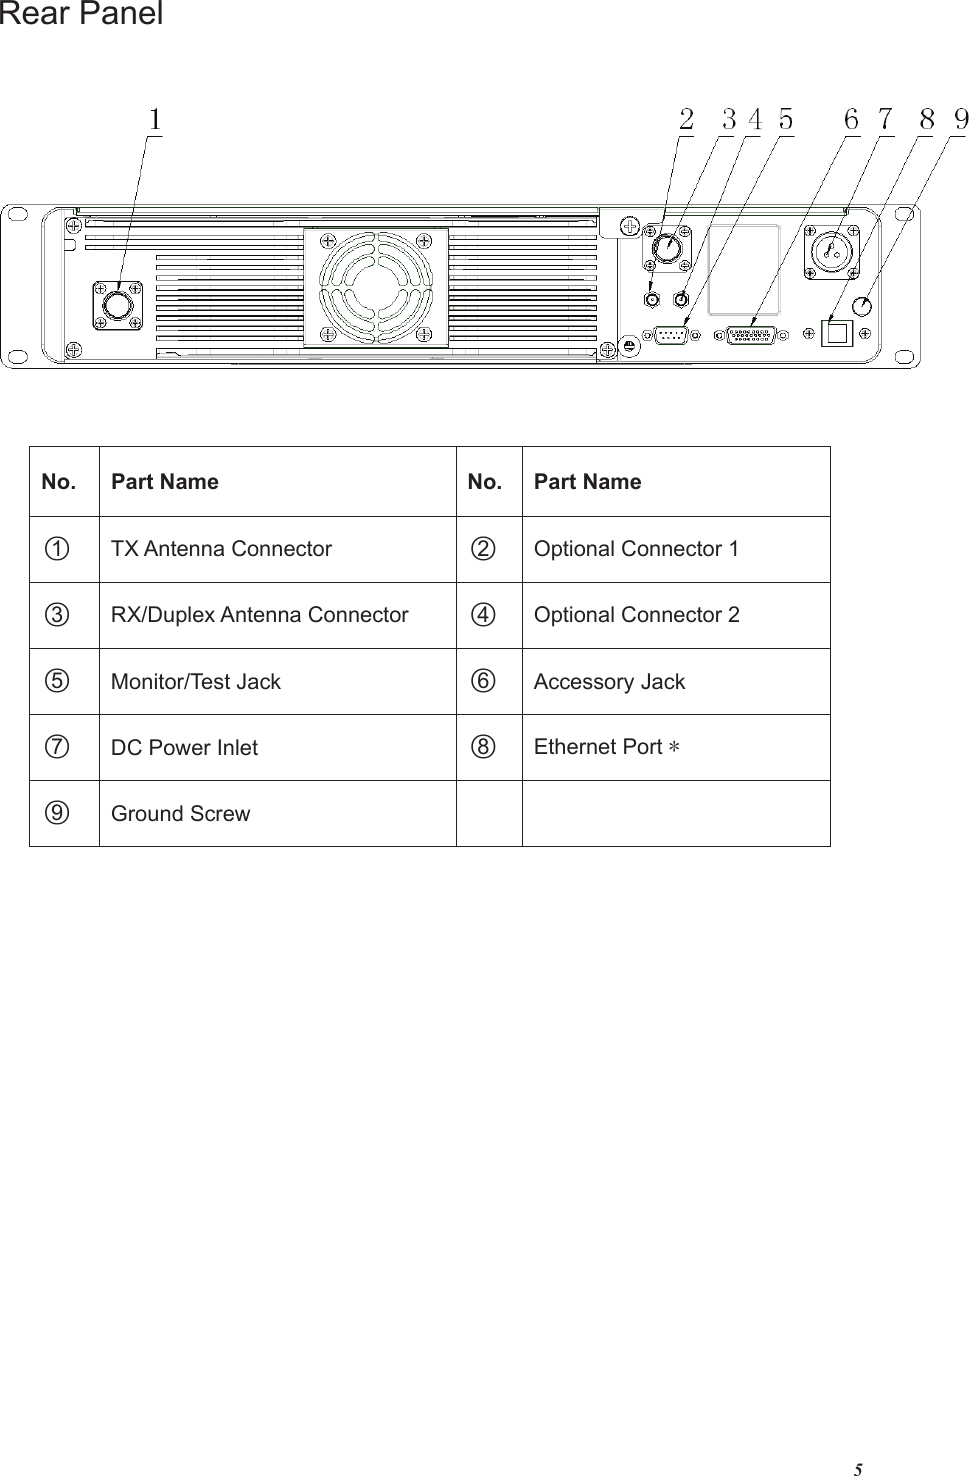 5Rear Panel  No. Part Name No. Part Nameƻ1TX Antenna Connector  ƻ2Optional Connector 1 ƻ3RX/Duplex Antenna Connector  ƻ4Optional Connector 2 ƻ5  Monitor/Test Jack  ƻ6  Accessory Jack ƻ7  DC Power Inlet  ƻ8  Ethernet Port ƻ9  Ground Screw     